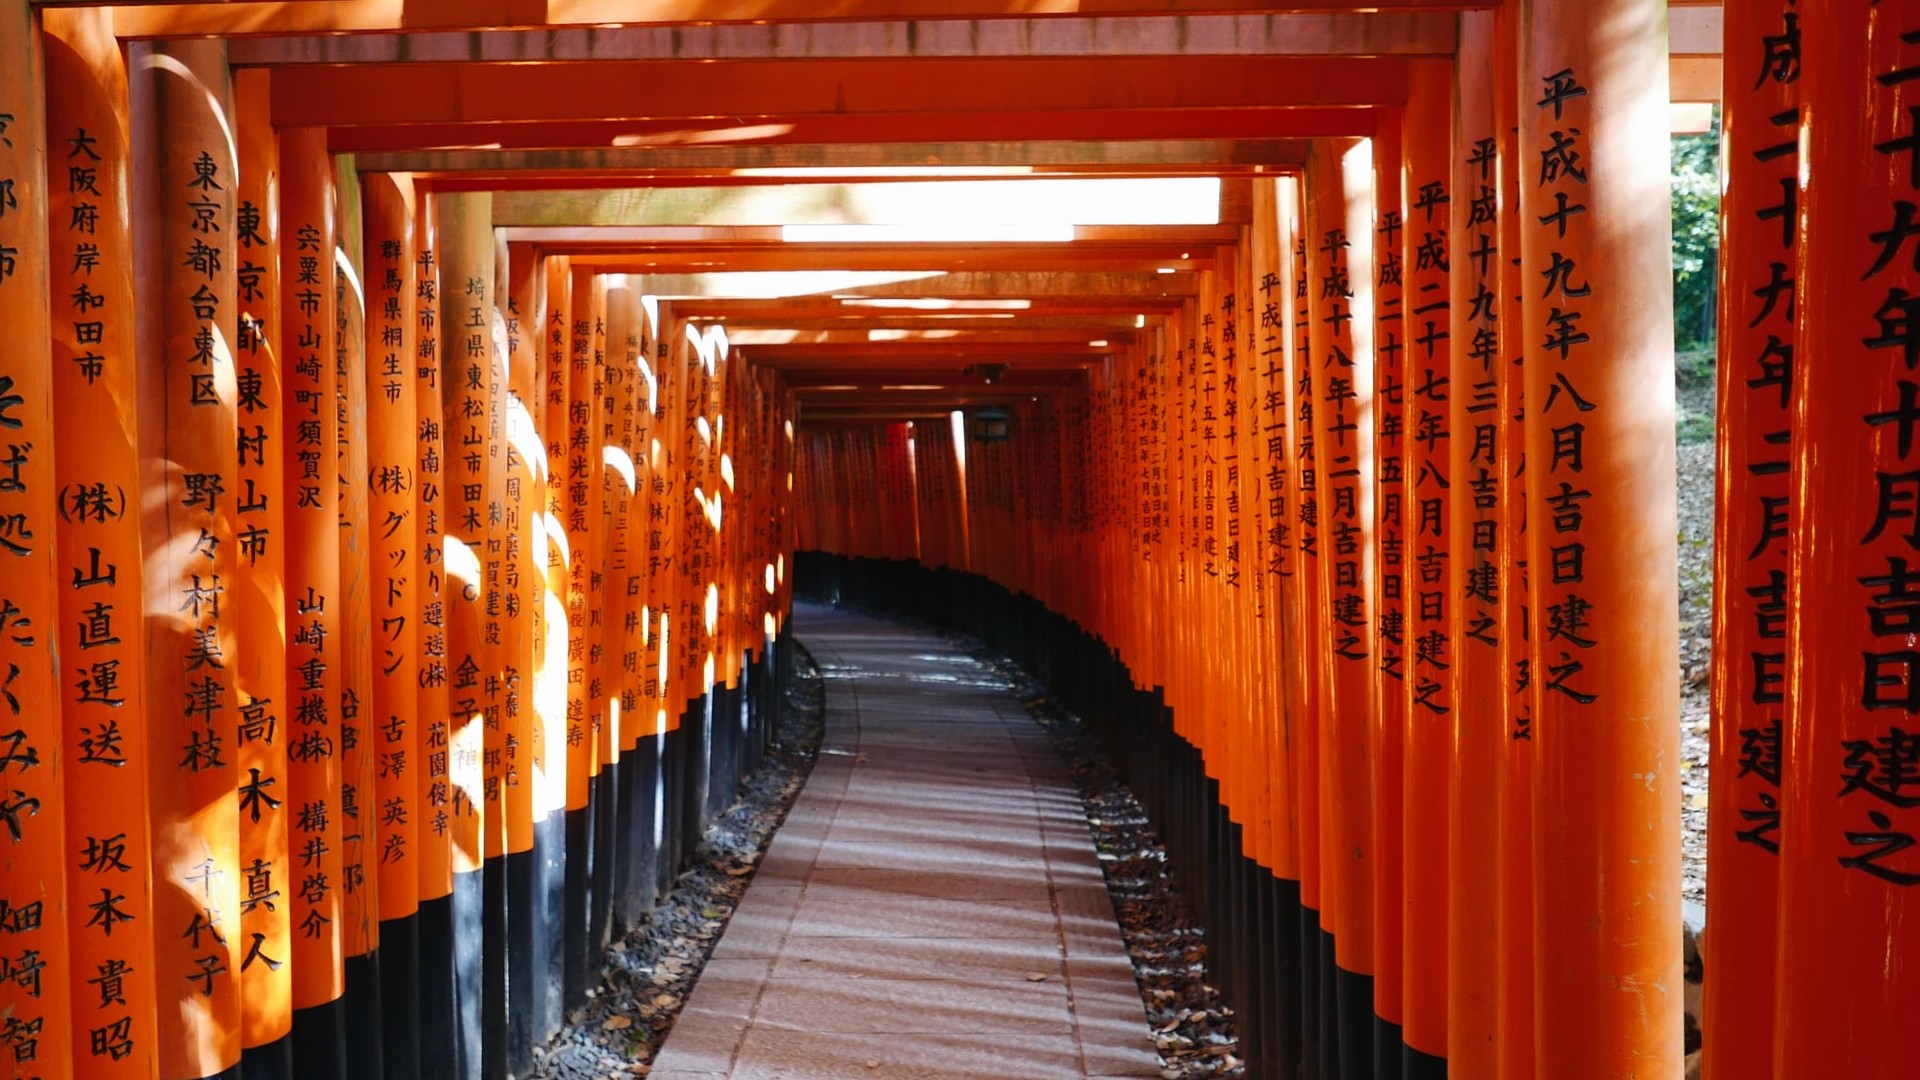 Interior of shrine located in Kyoto